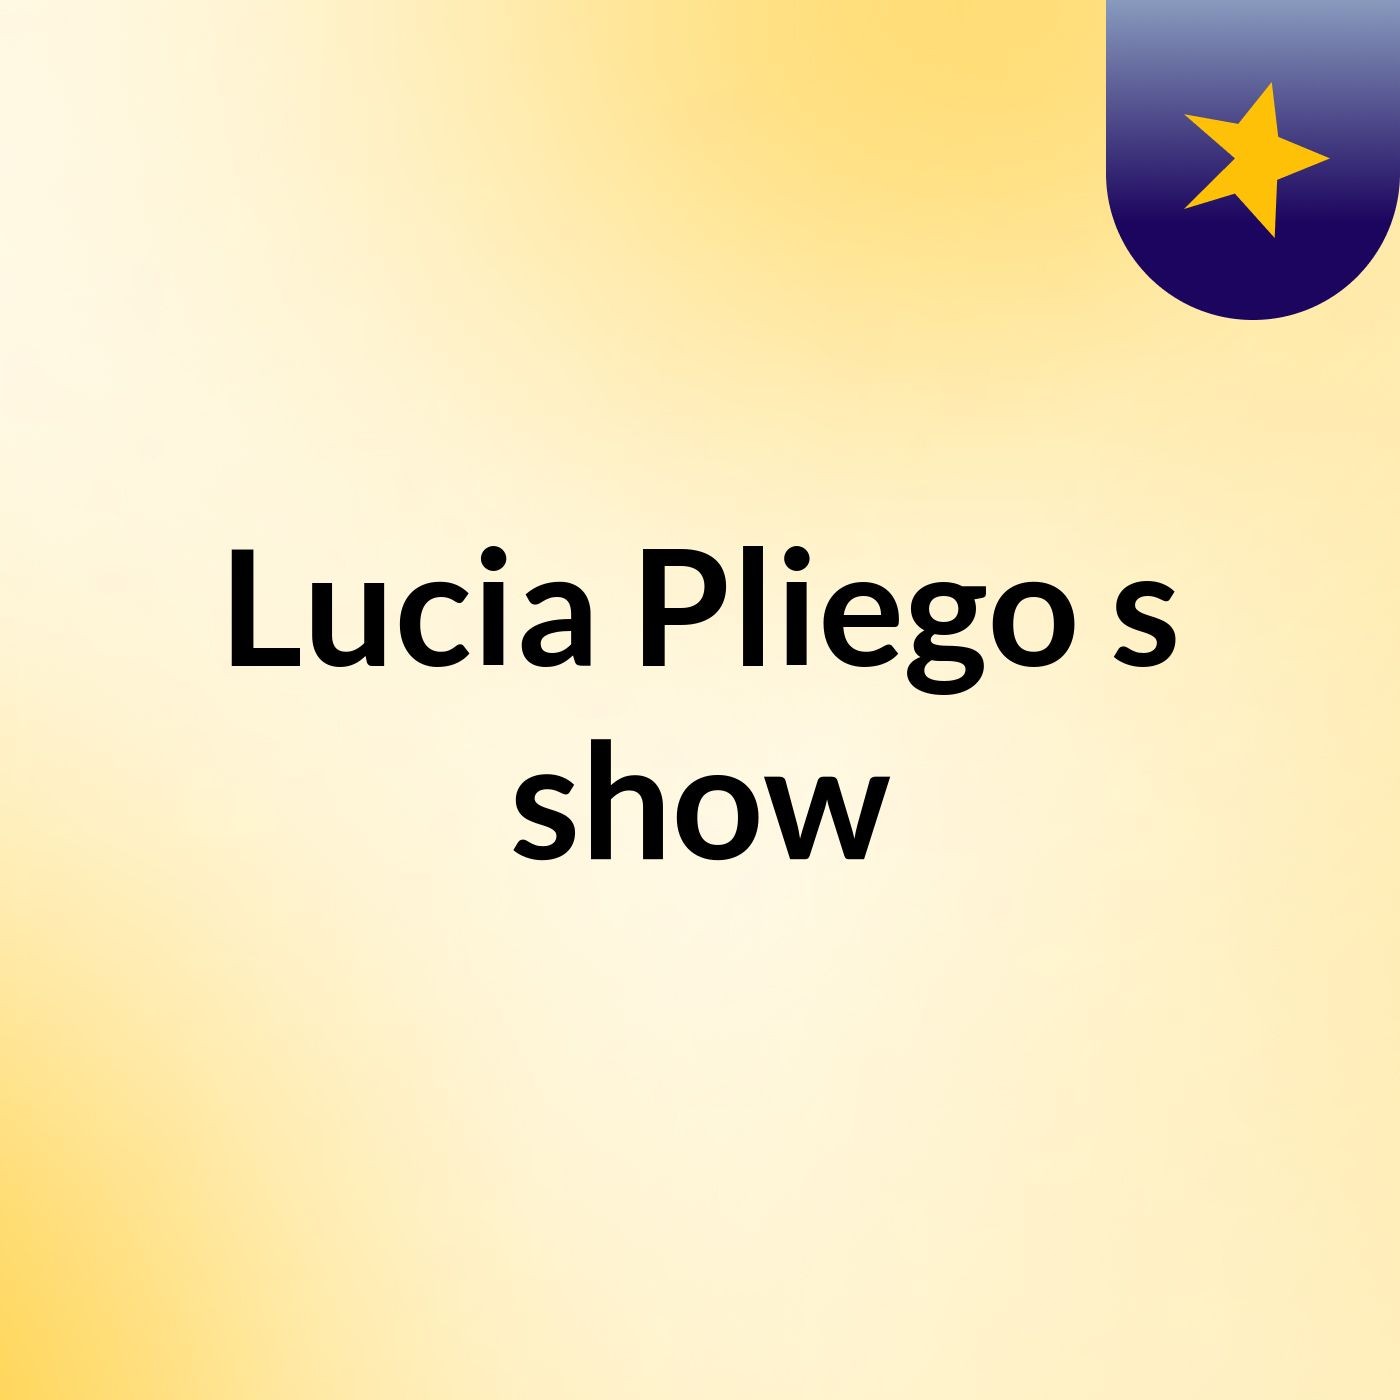 Lucia Pliego's show